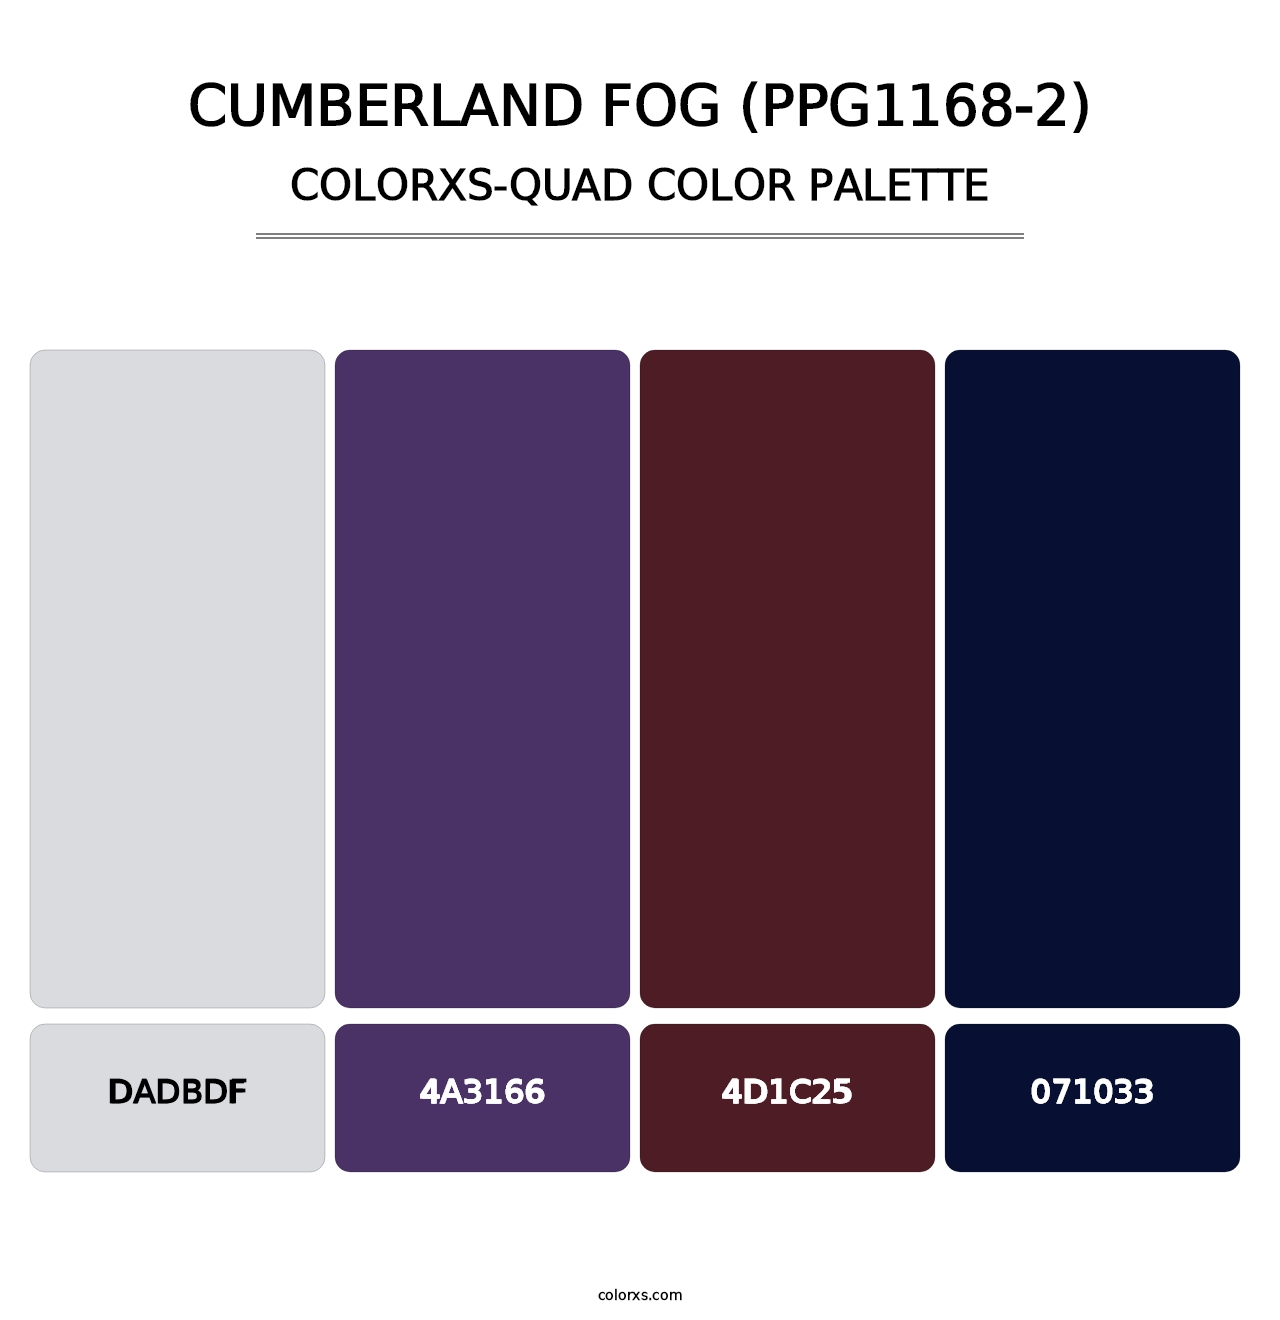 Cumberland Fog (PPG1168-2) - Colorxs Quad Palette